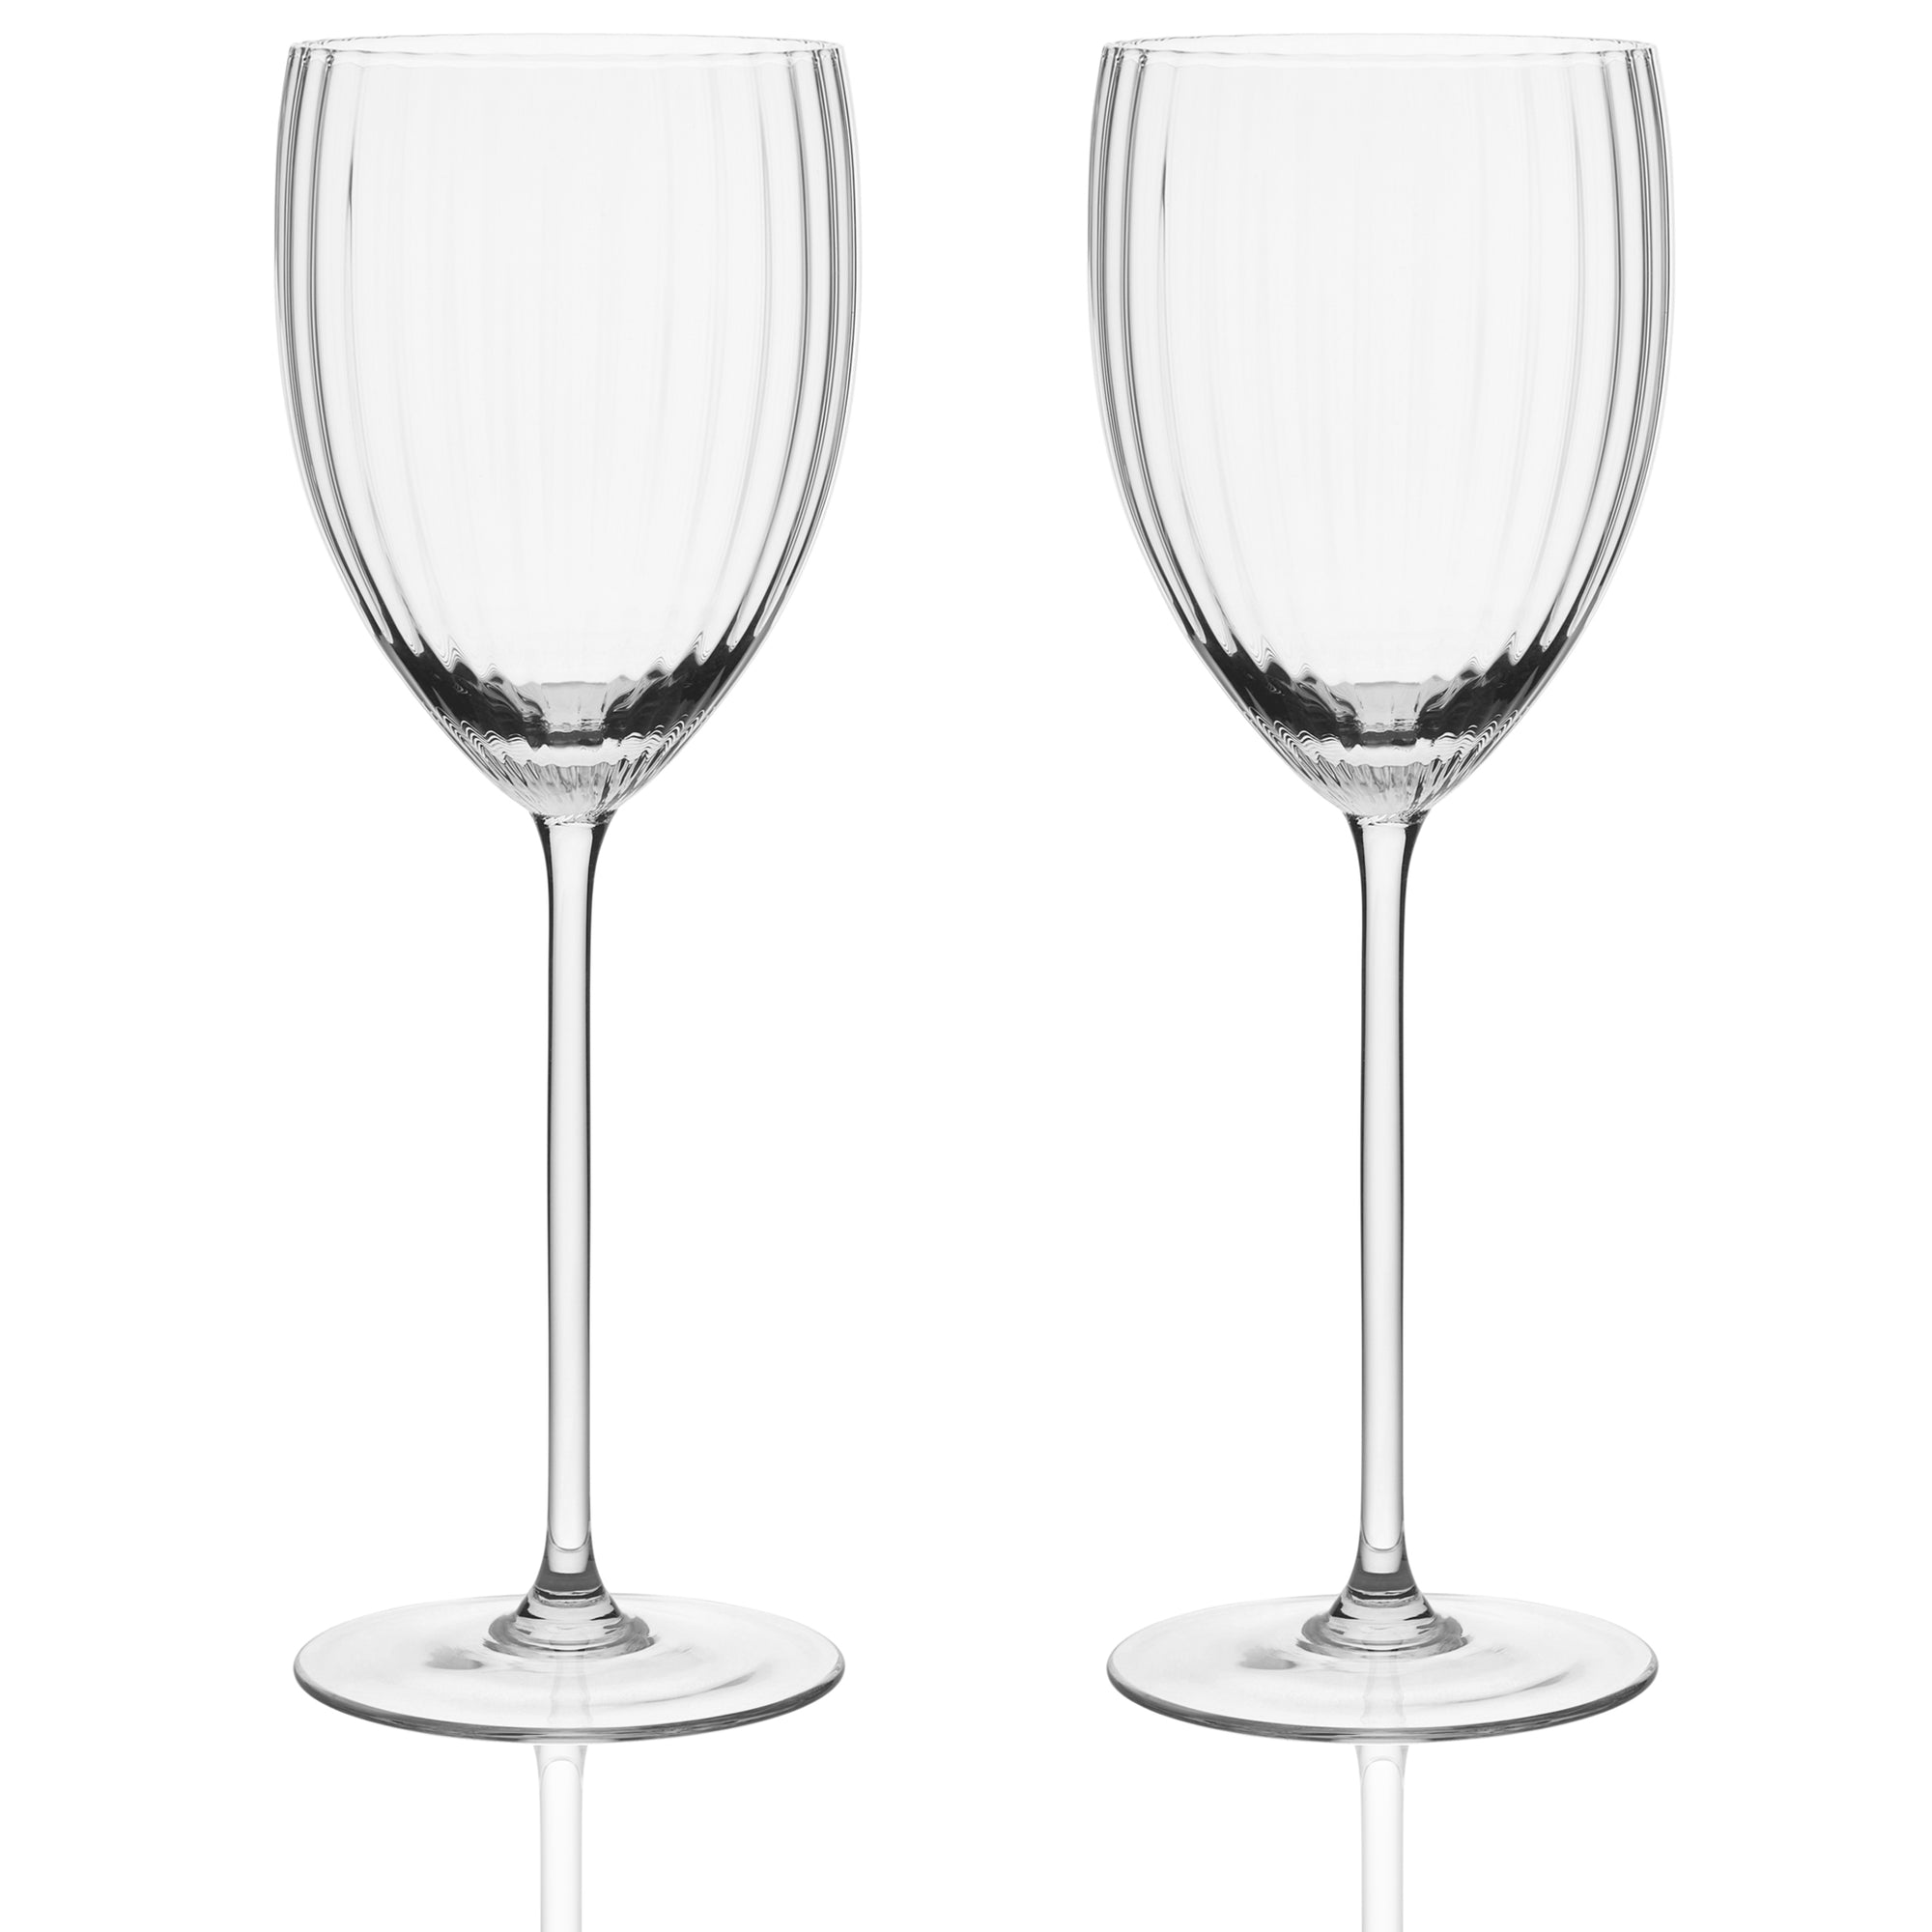 Quinn optic clear universal mouth-blown wine glasses from Caskata.